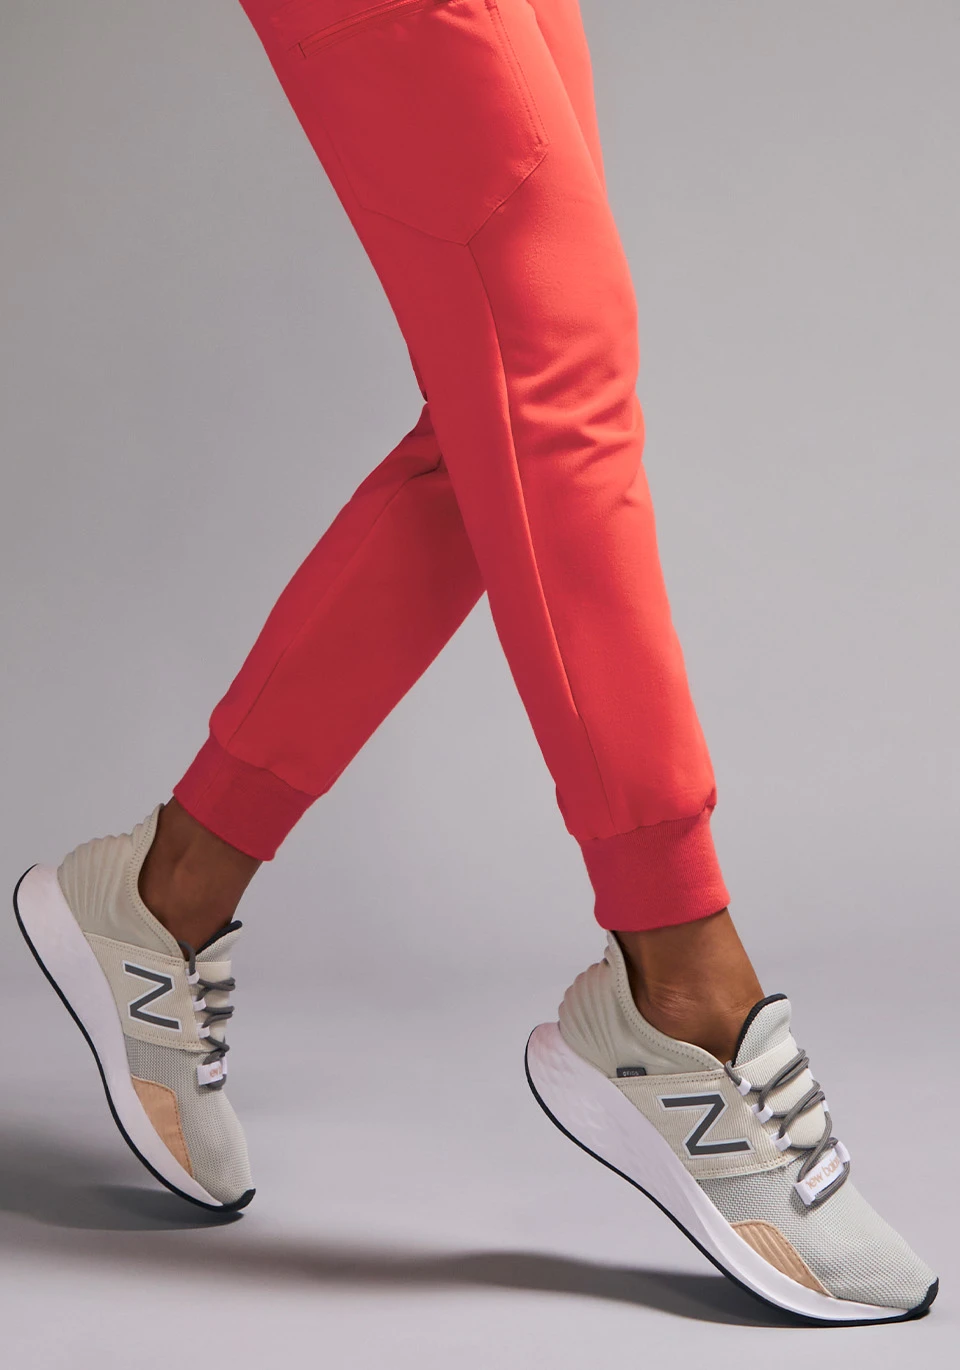 FIGS Zamora Jogger Style Scrub Pants for Women Slim Fit 6 Pockets